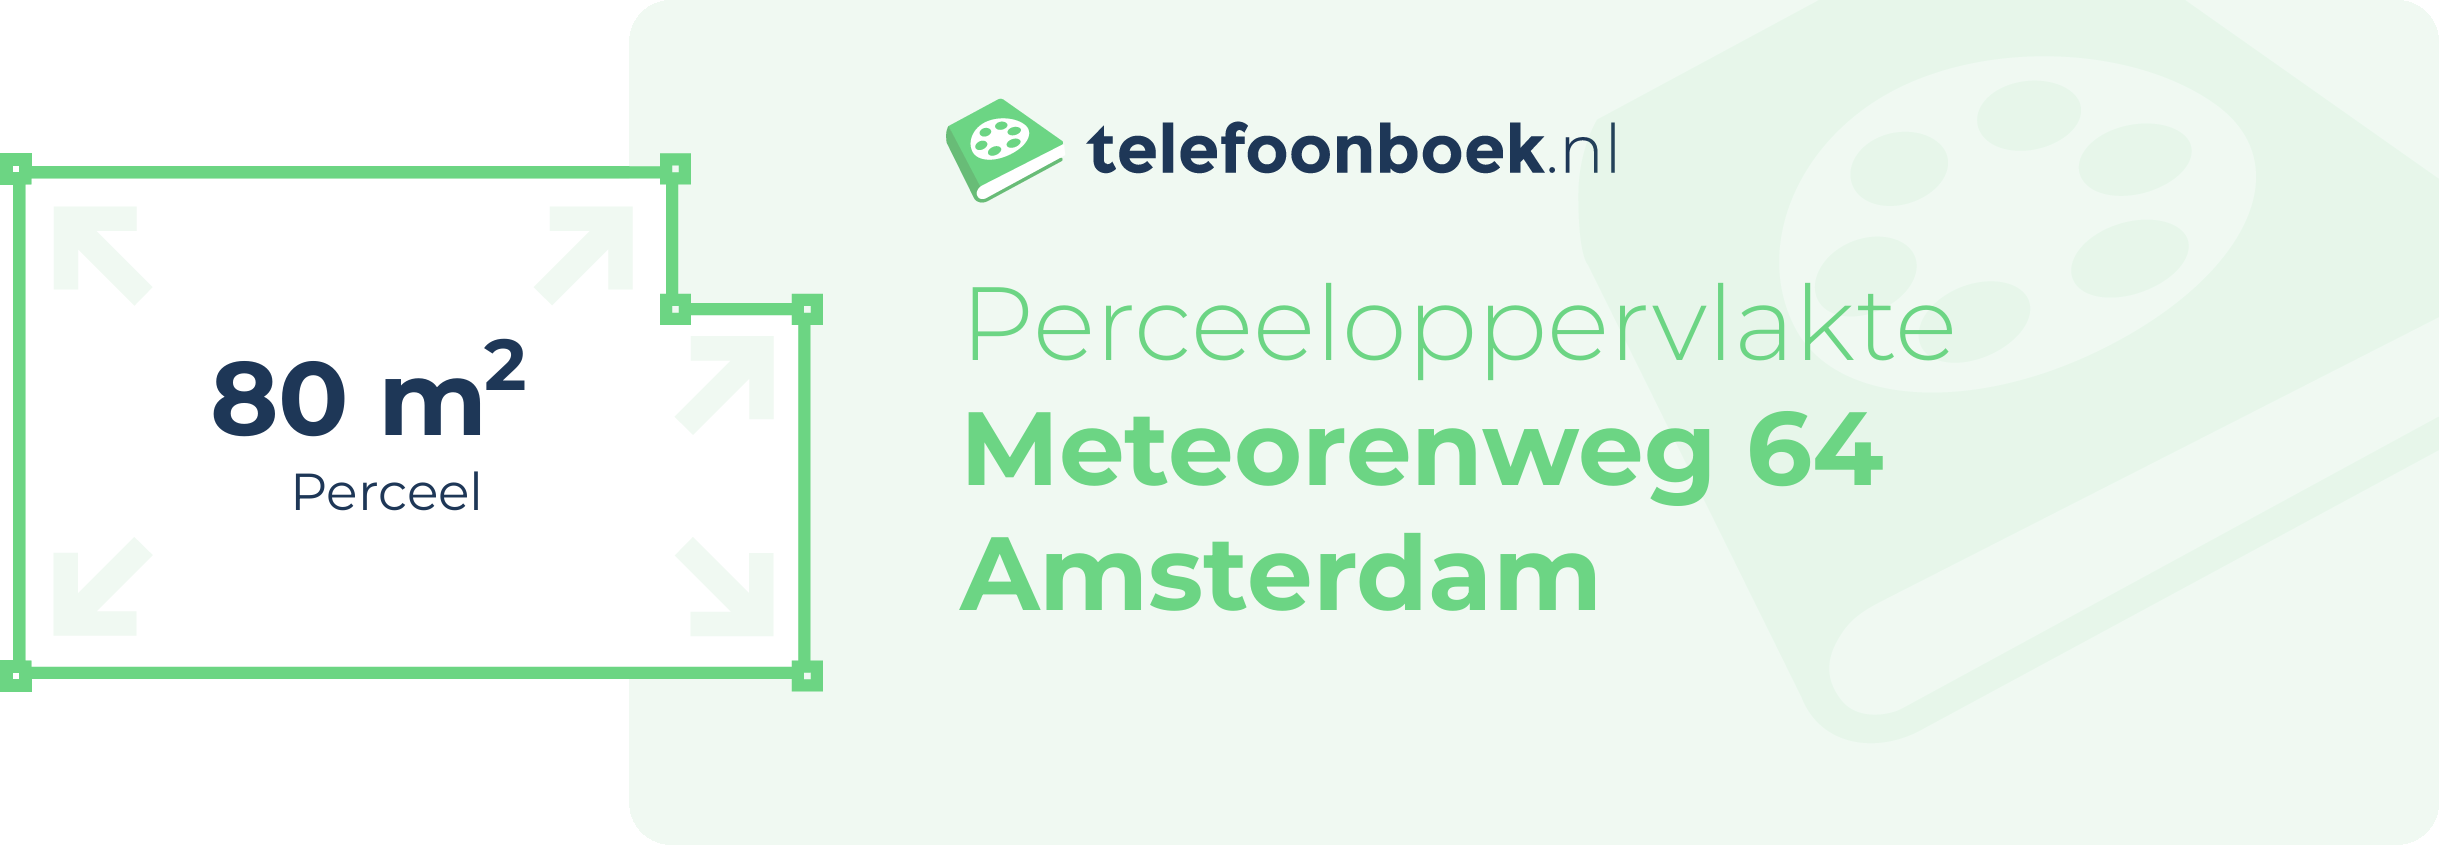 Perceeloppervlakte Meteorenweg 64 Amsterdam